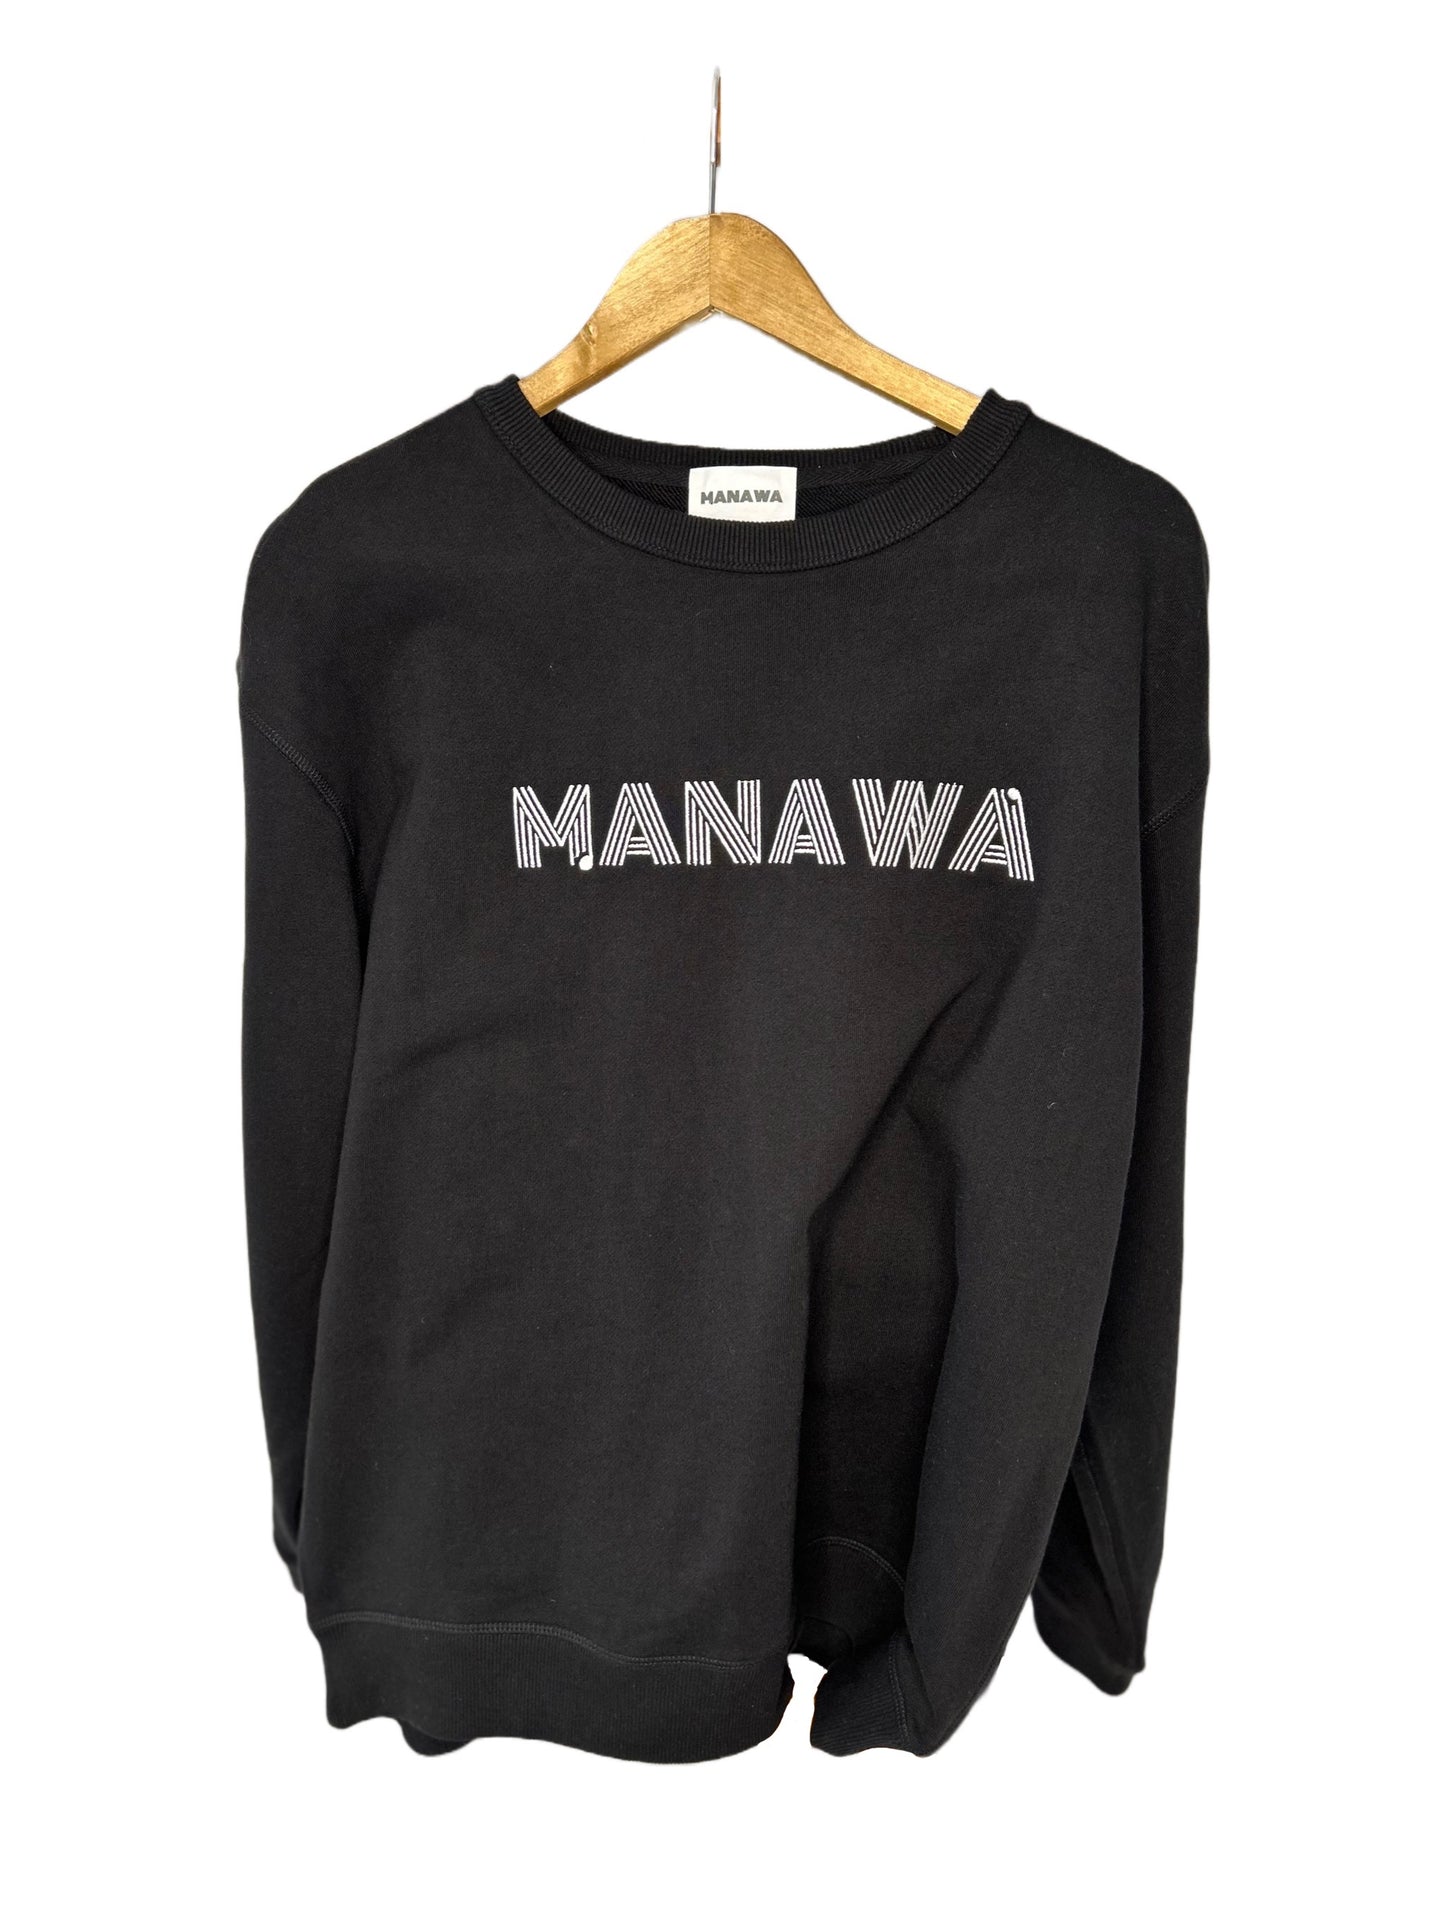 MANAWA crew - white embroidery